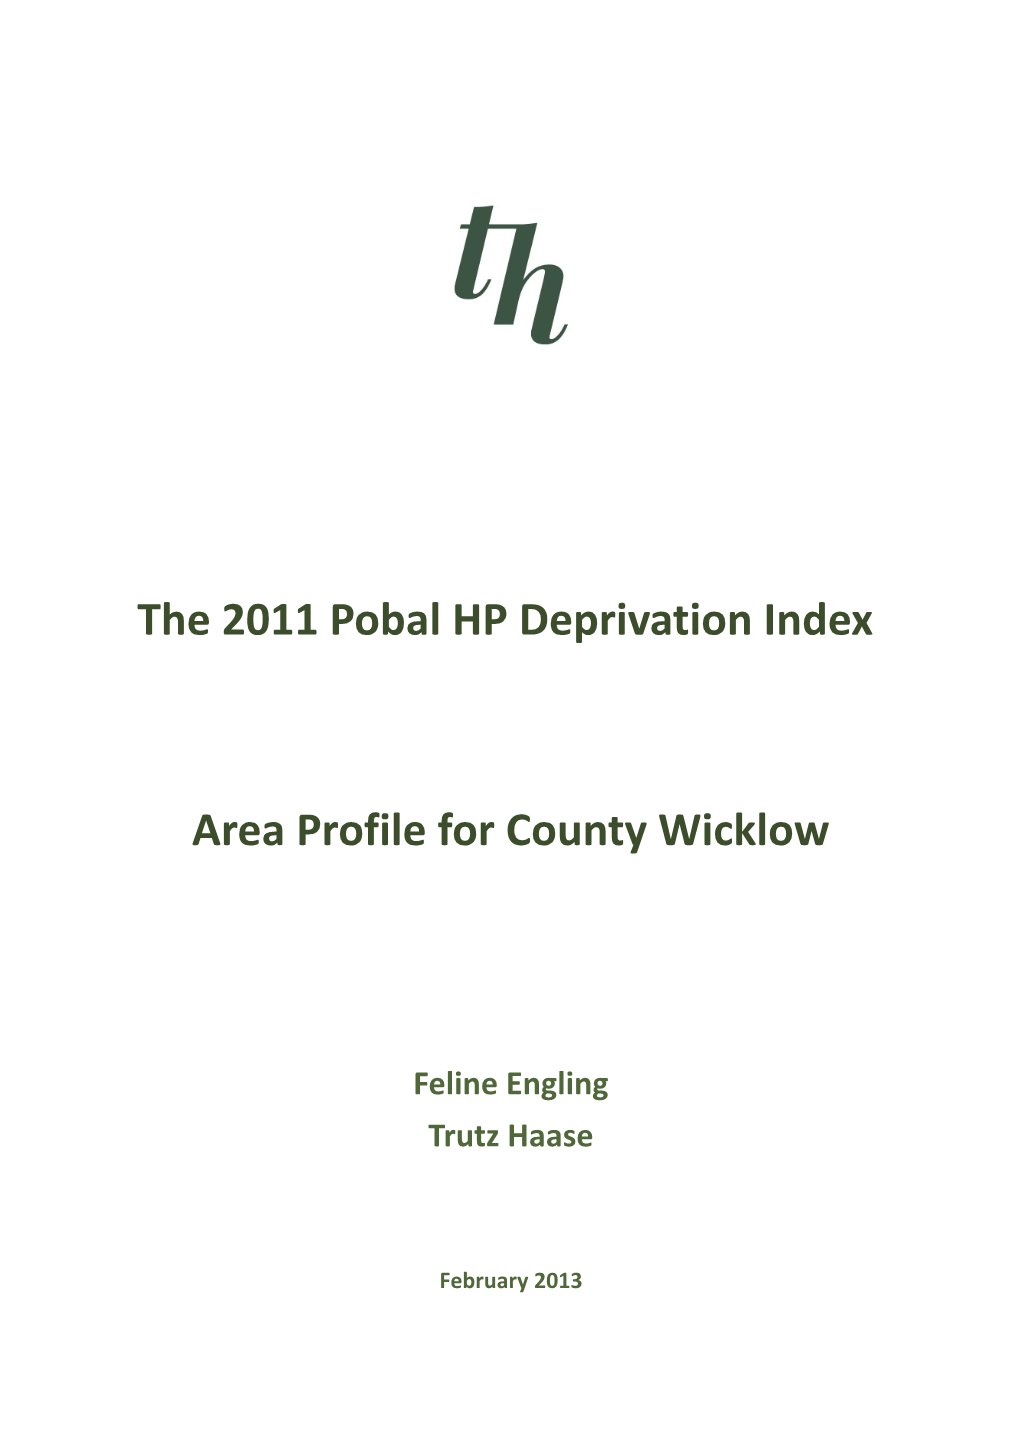 Area Profile for County Wicklow